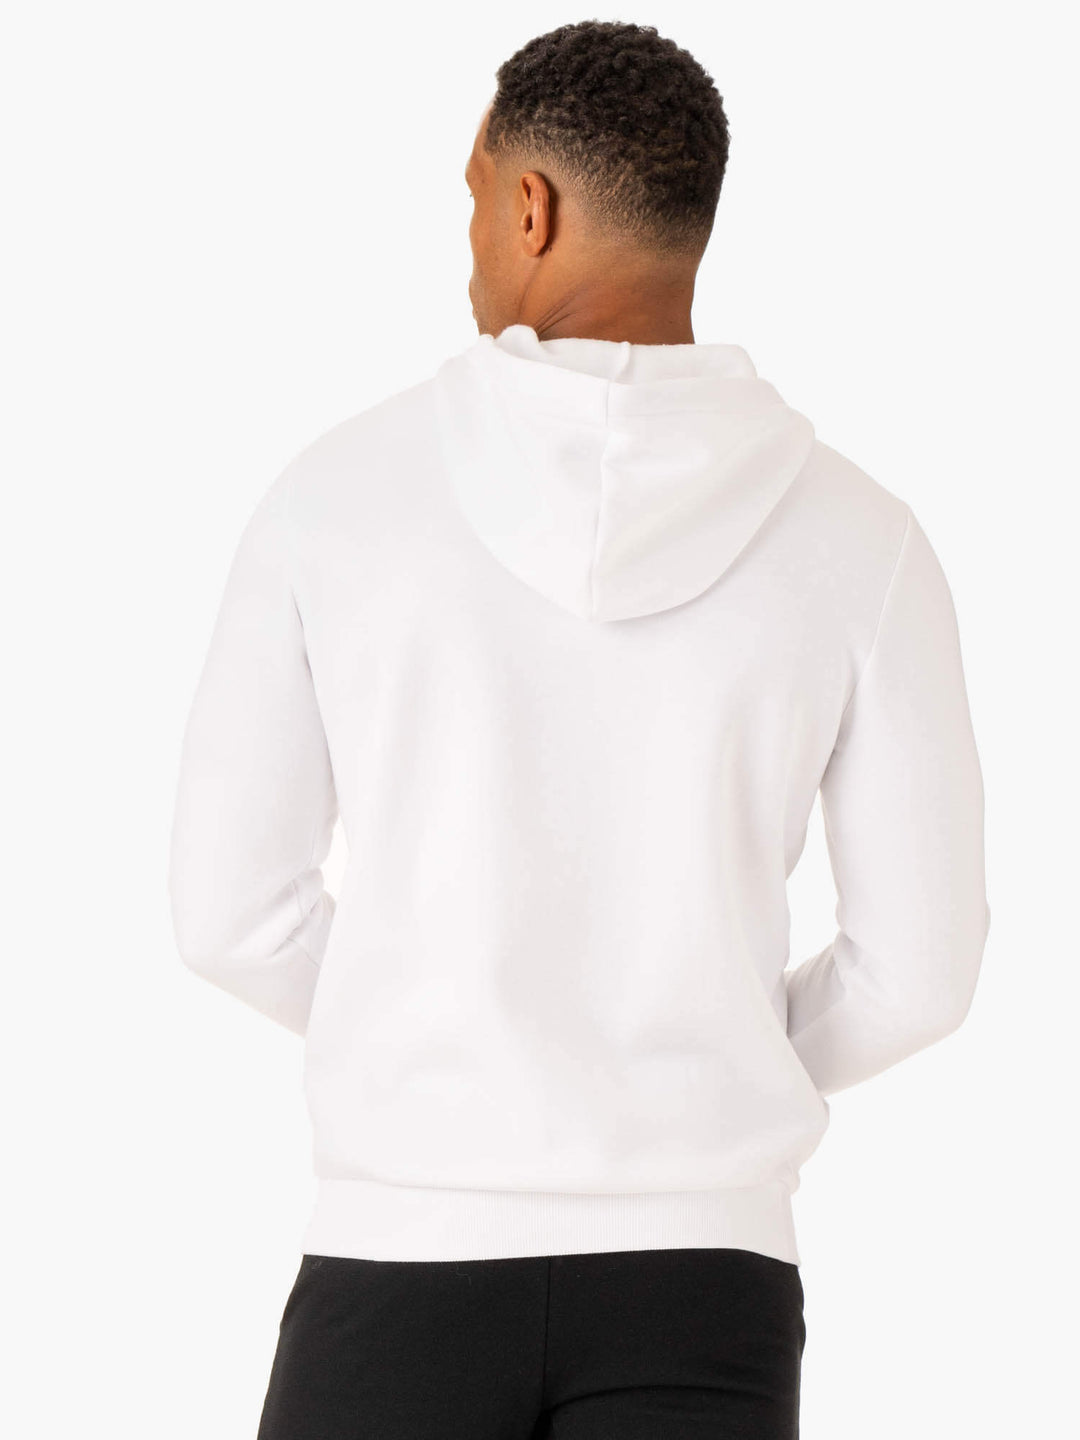 Limitless Zip Up Jacket - White Clothing Ryderwear 